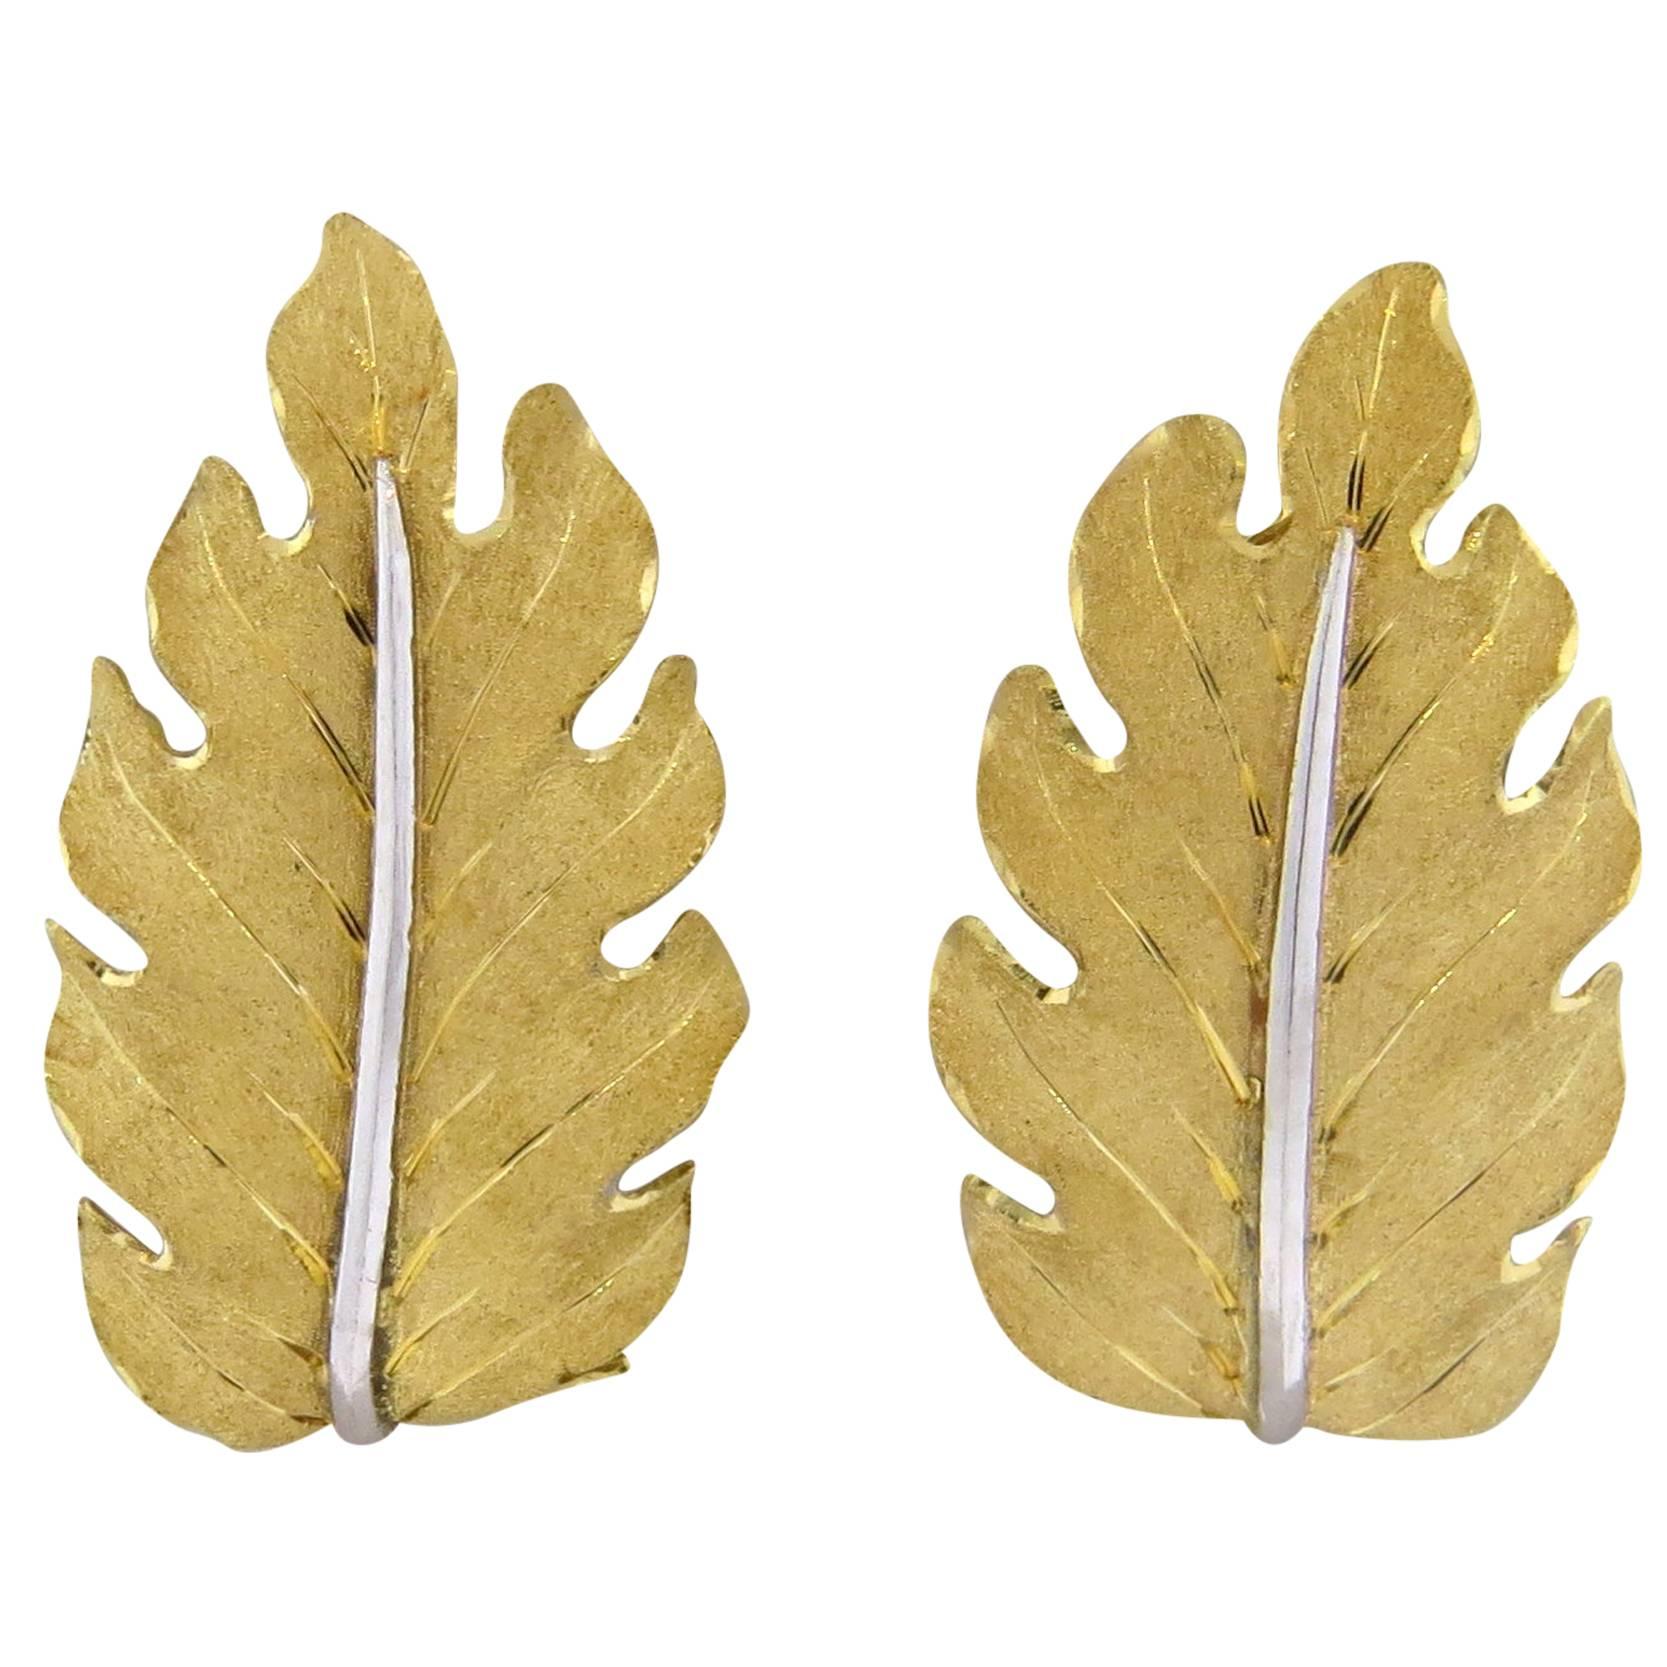 Classic Buccellati Gold Leaf Earrings 